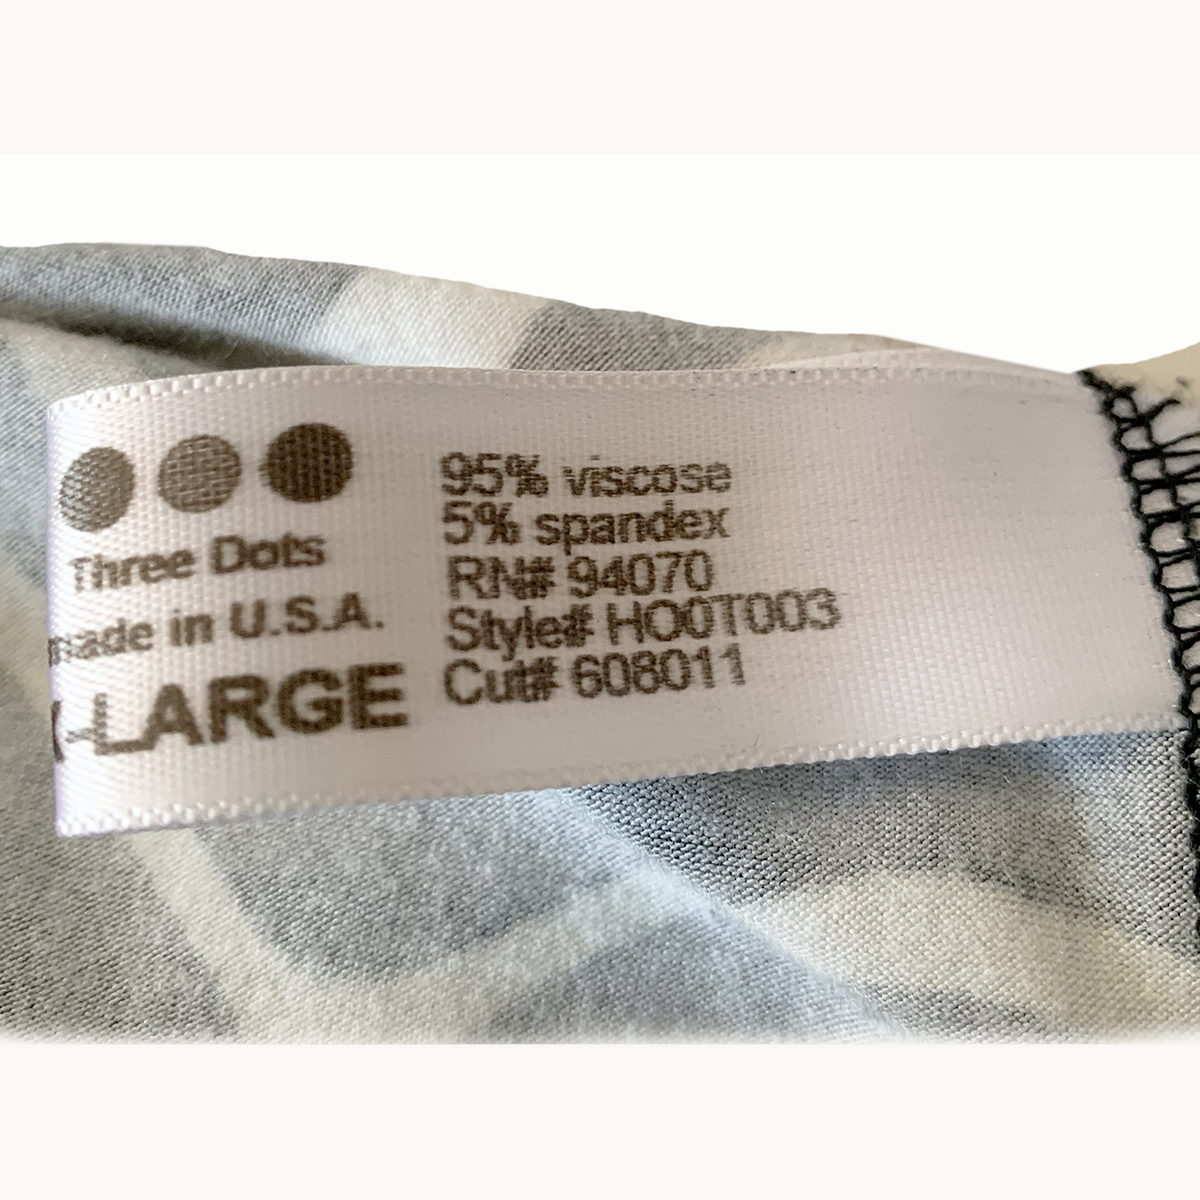 three dots clothing label